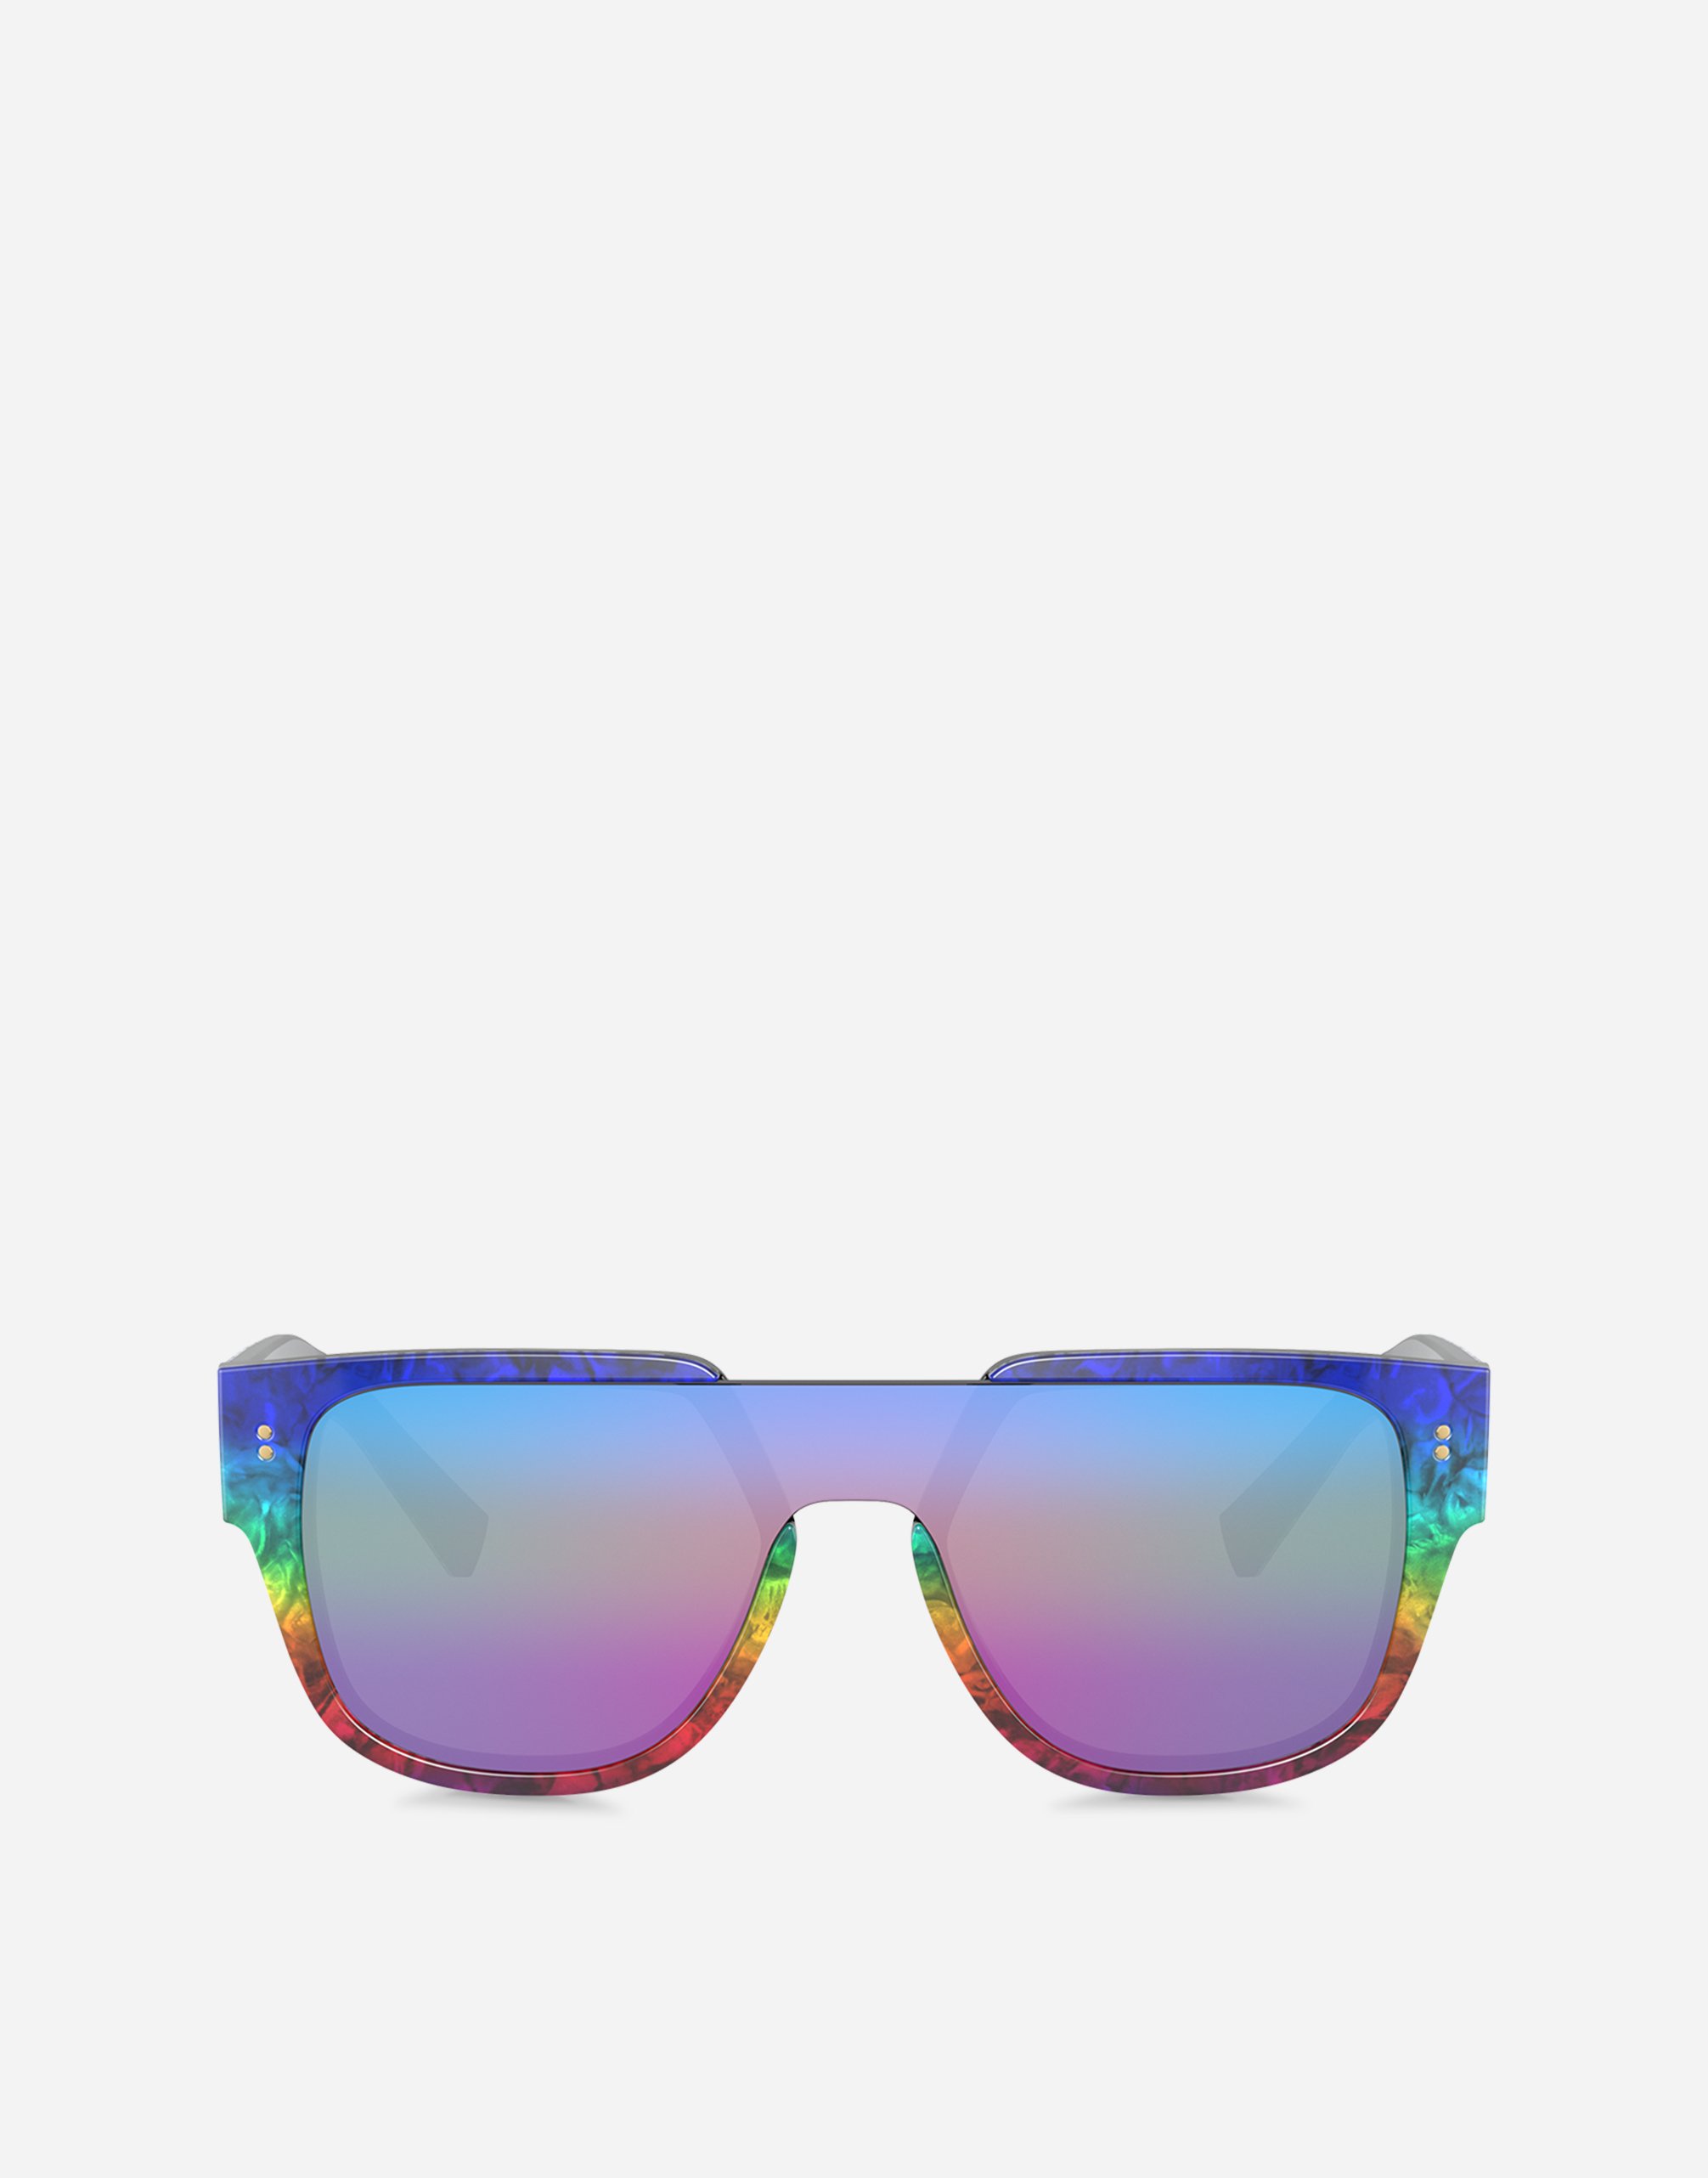 Iridescent rainbow sunglasses in rainbow